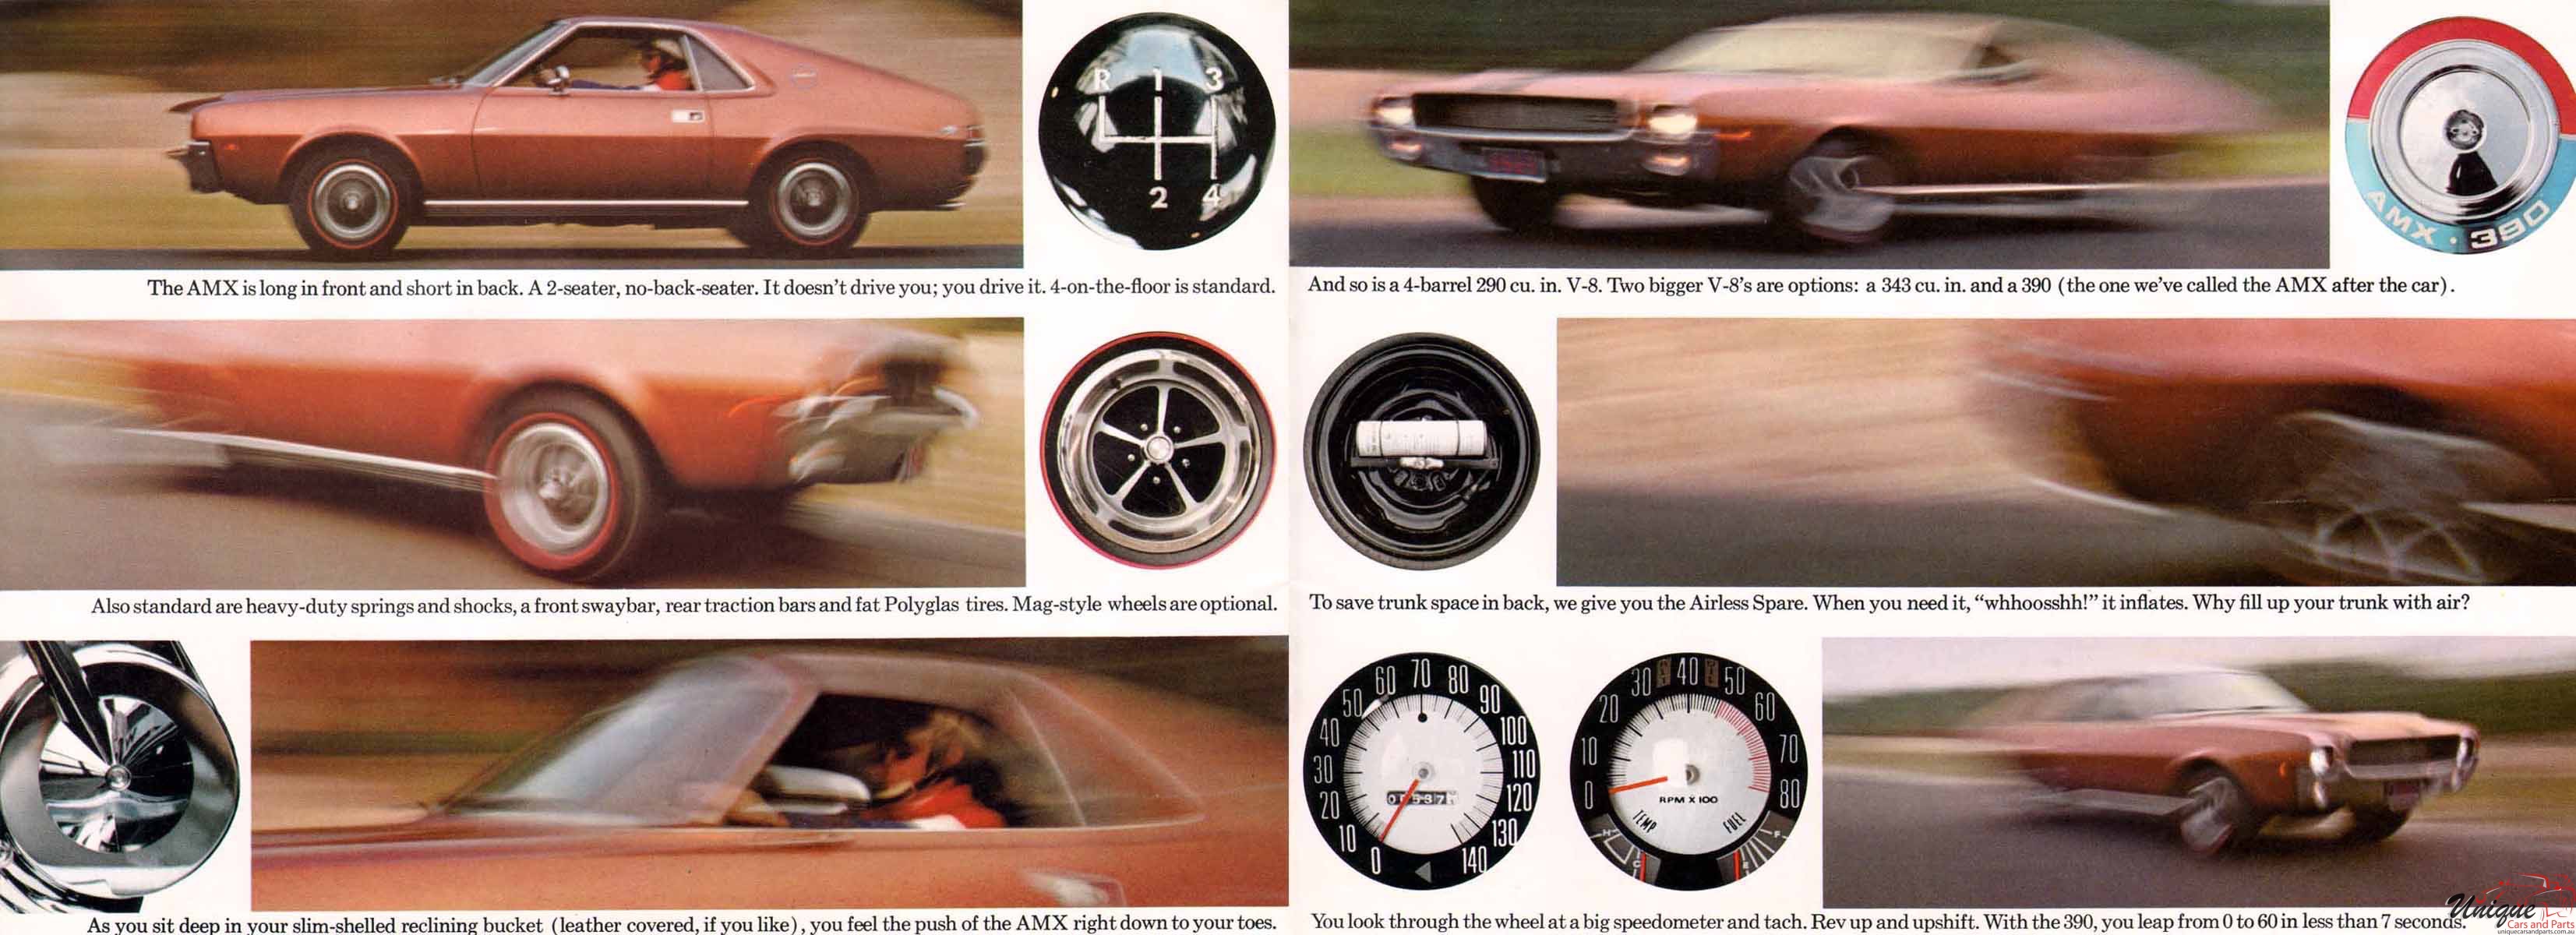 1969 AMC Full-Line All Models Brochure Page 10